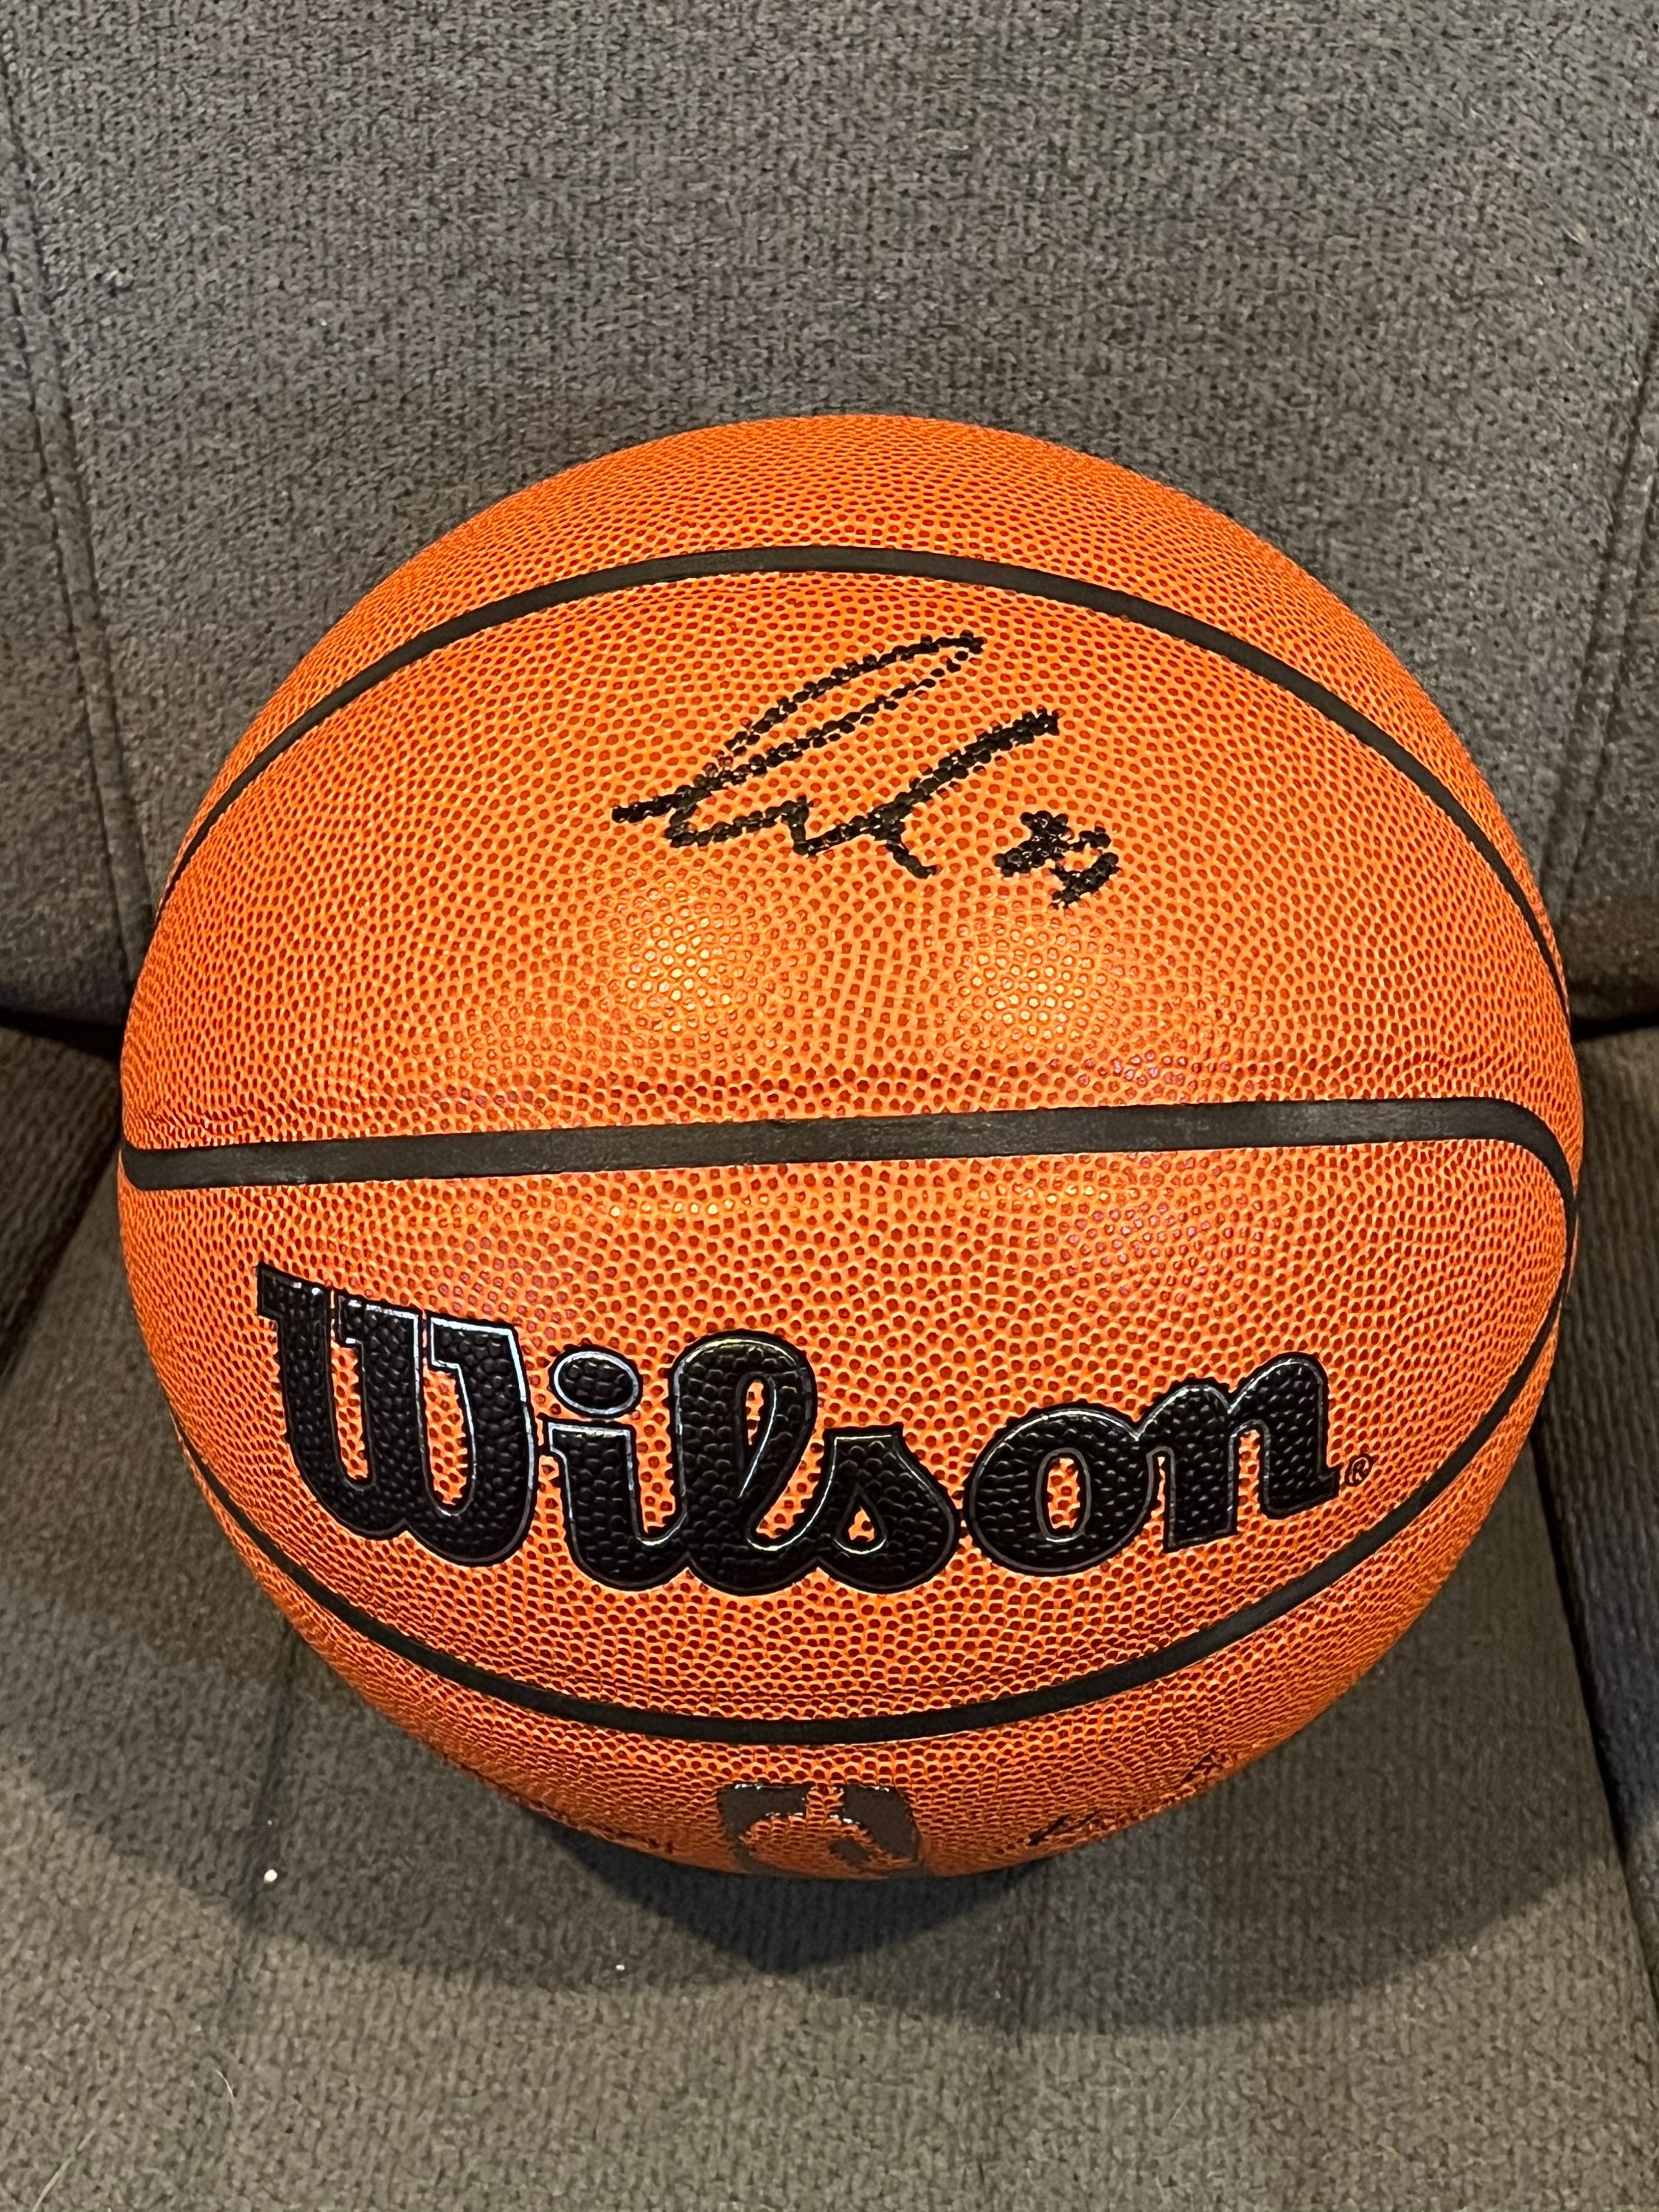 Luka Doncic Autographed Spalding Indoor/Outdoor Basketball - Fanatics